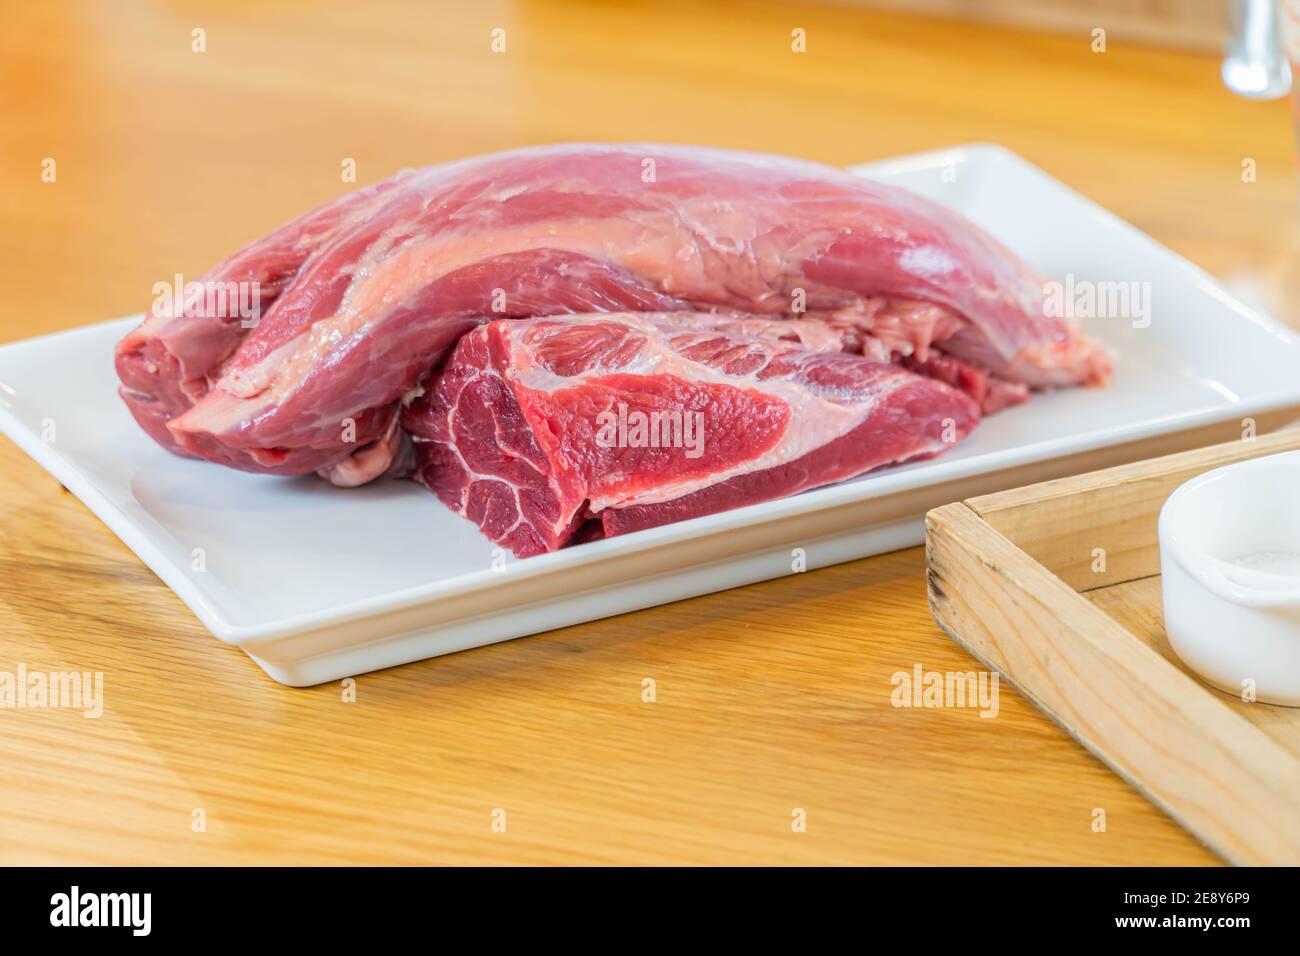 Raw pork on dish and ingredient. Stock Photo